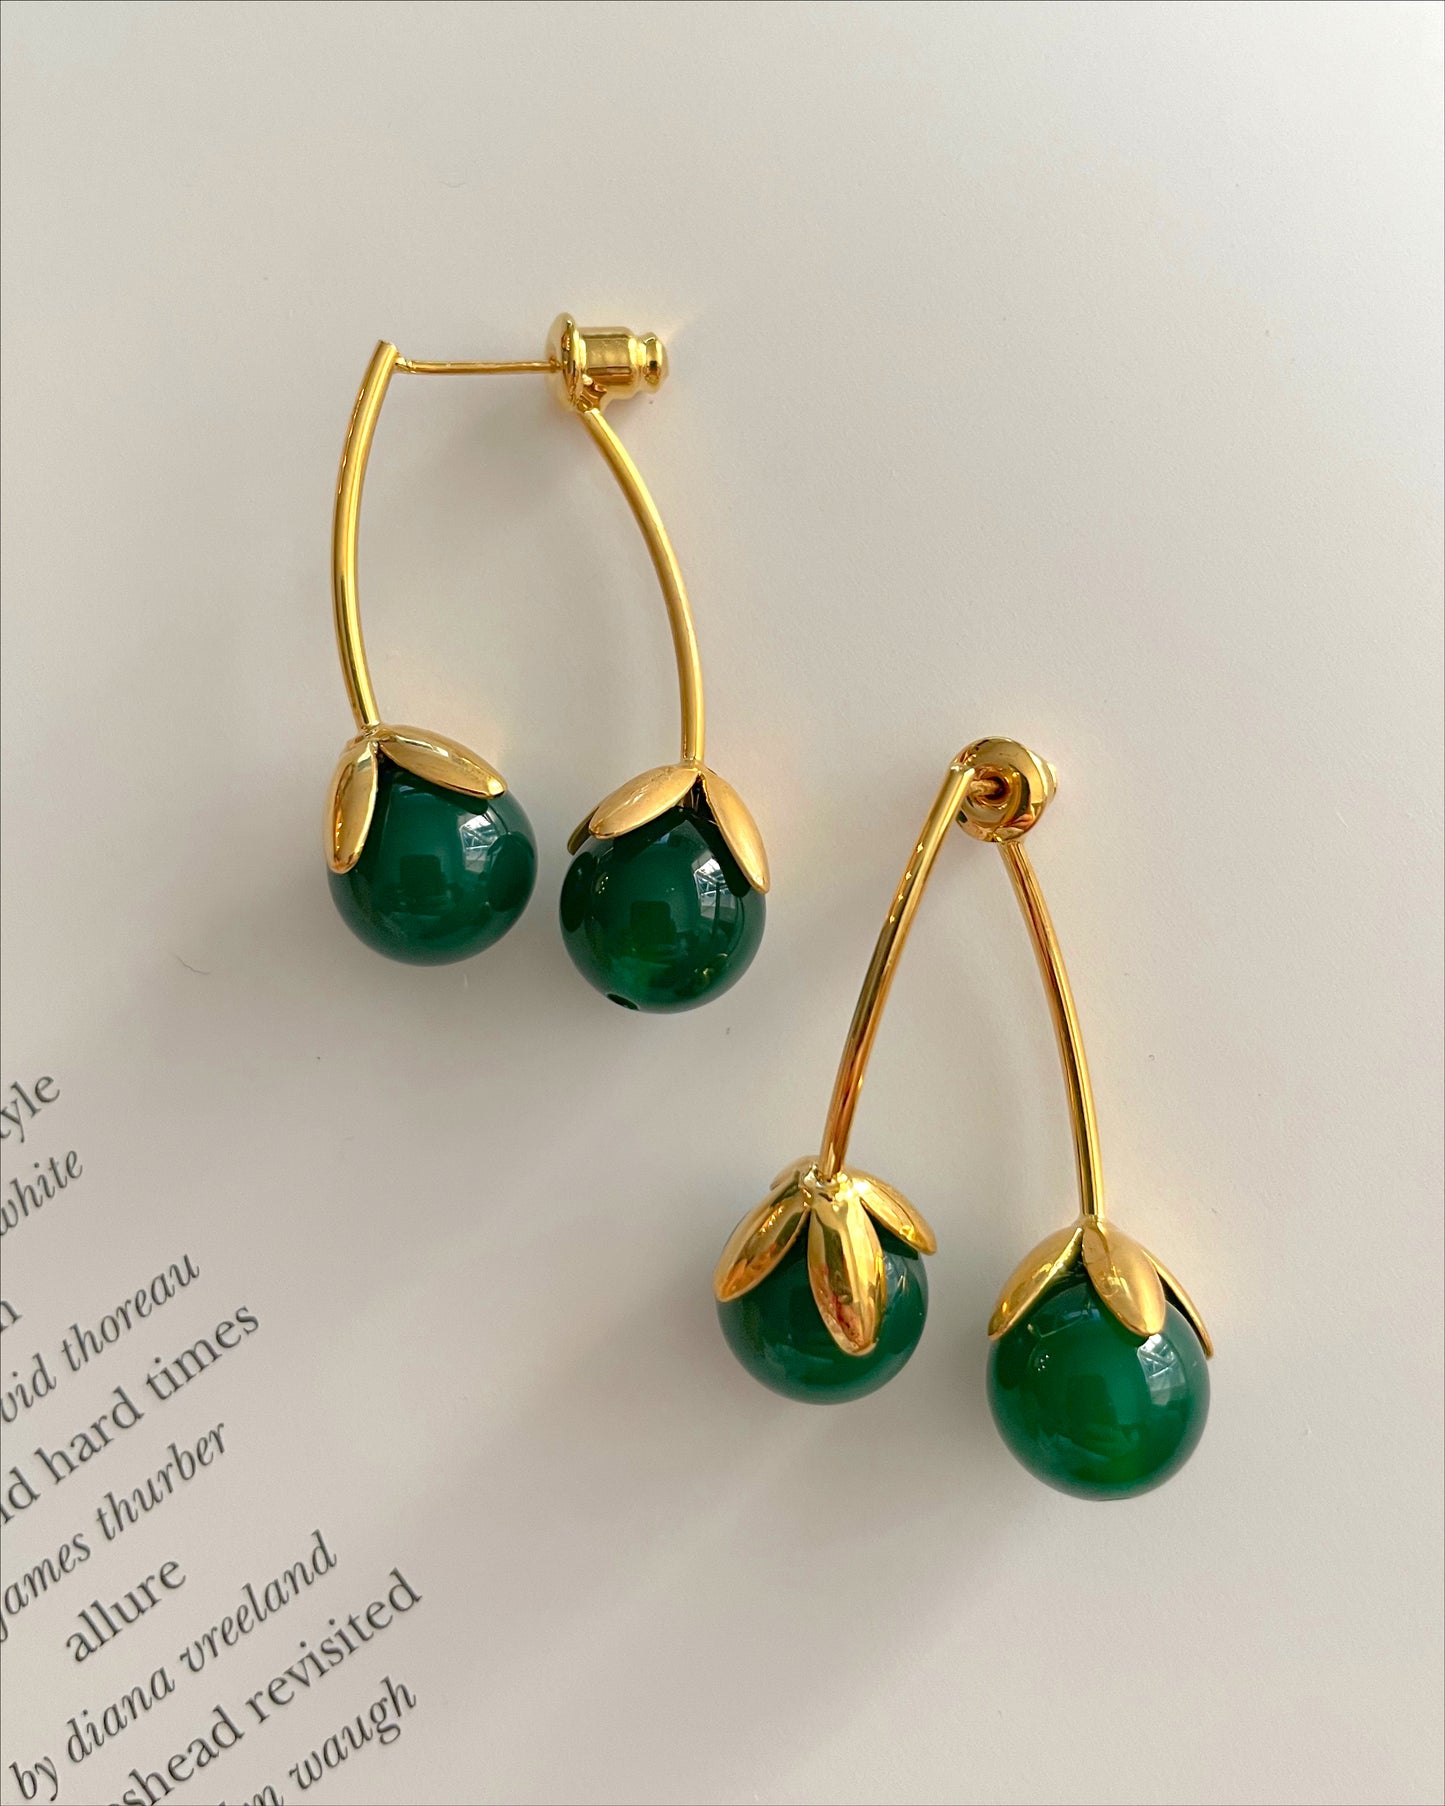 Cherry style stone earrings